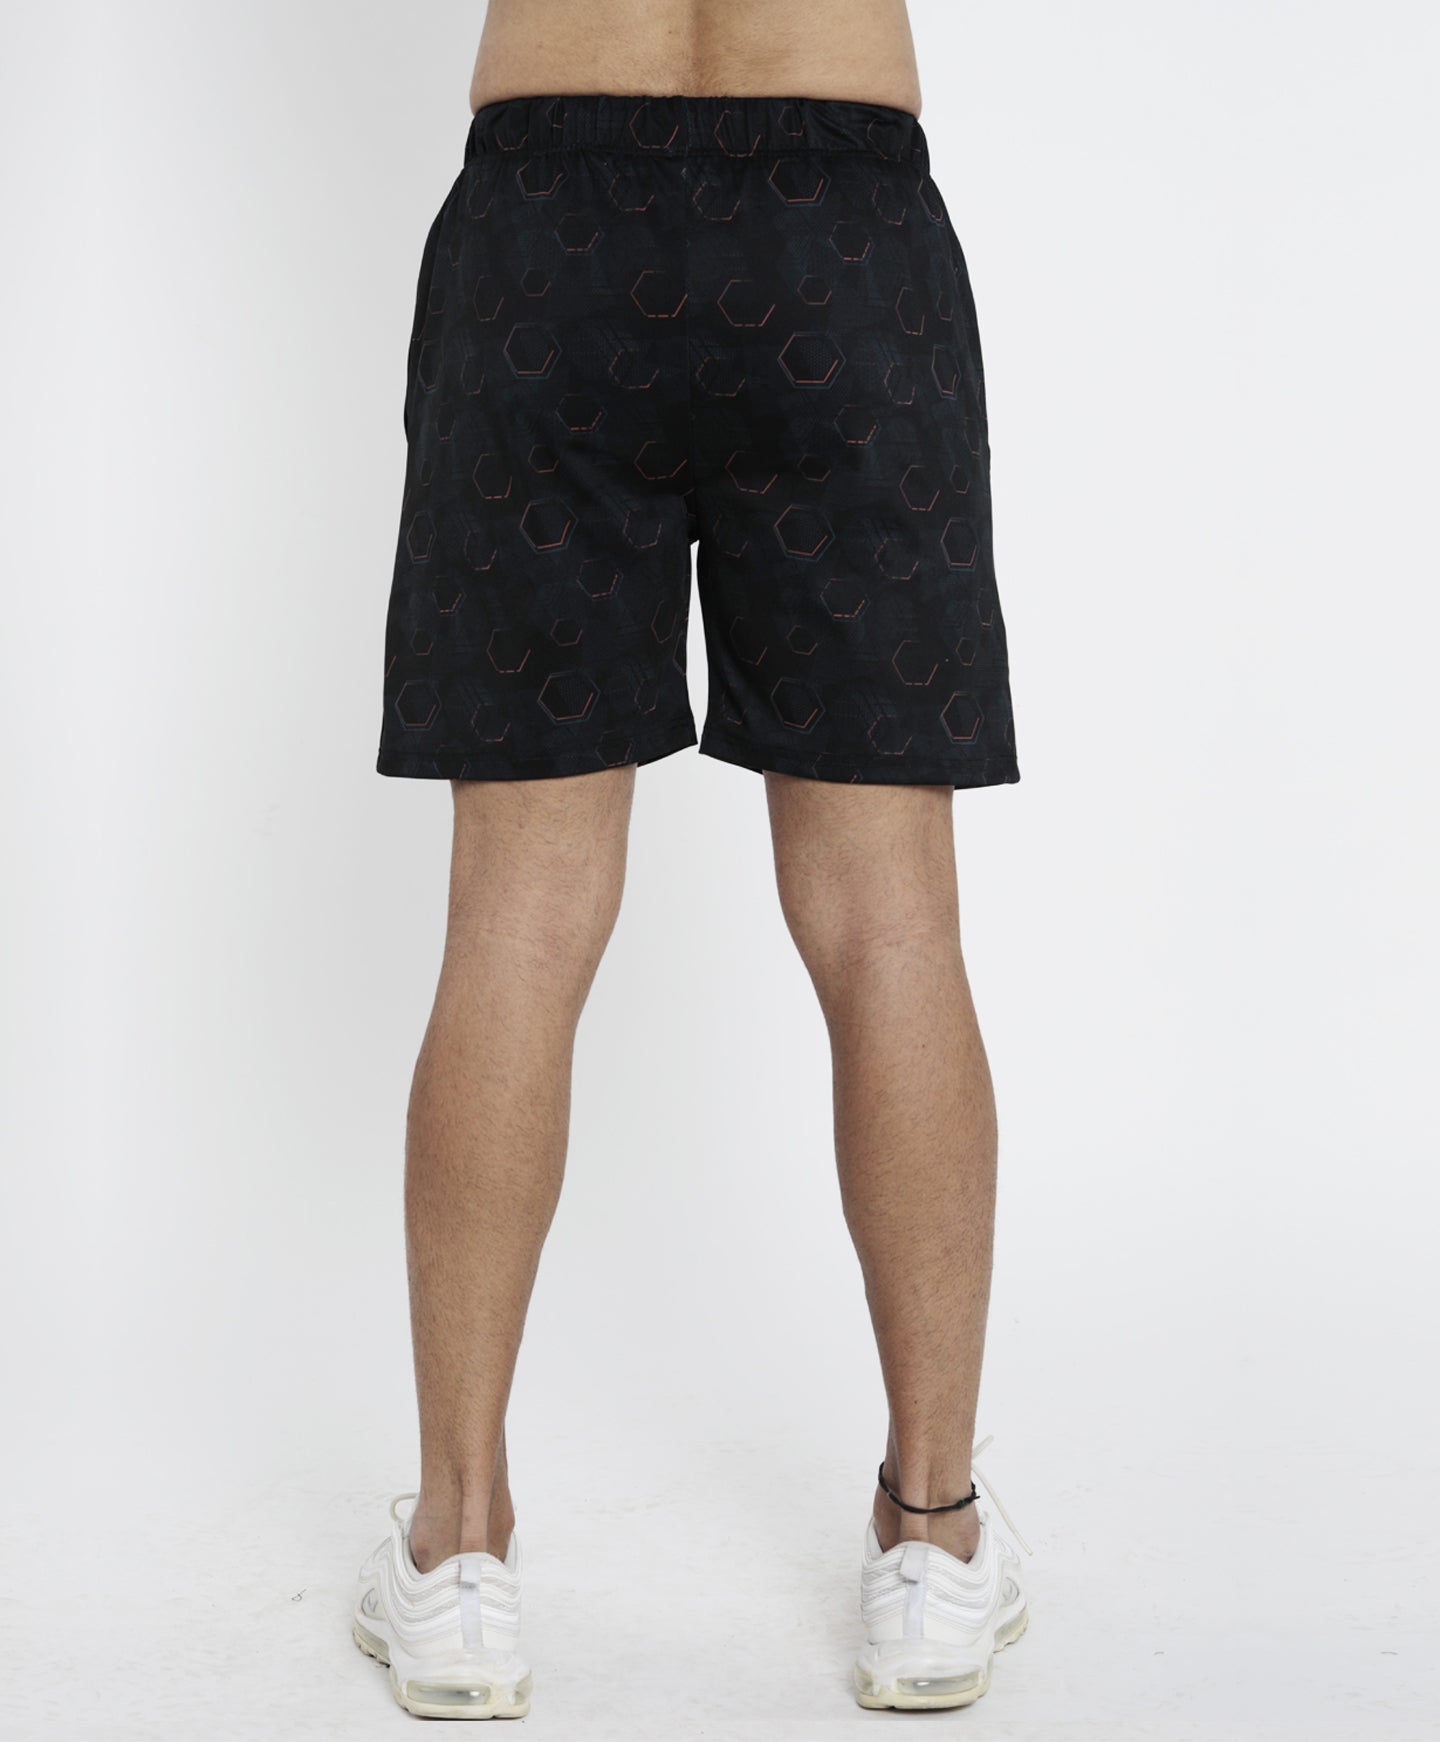 Hexagonal Camo Shorts (4 way stretch) - Sale